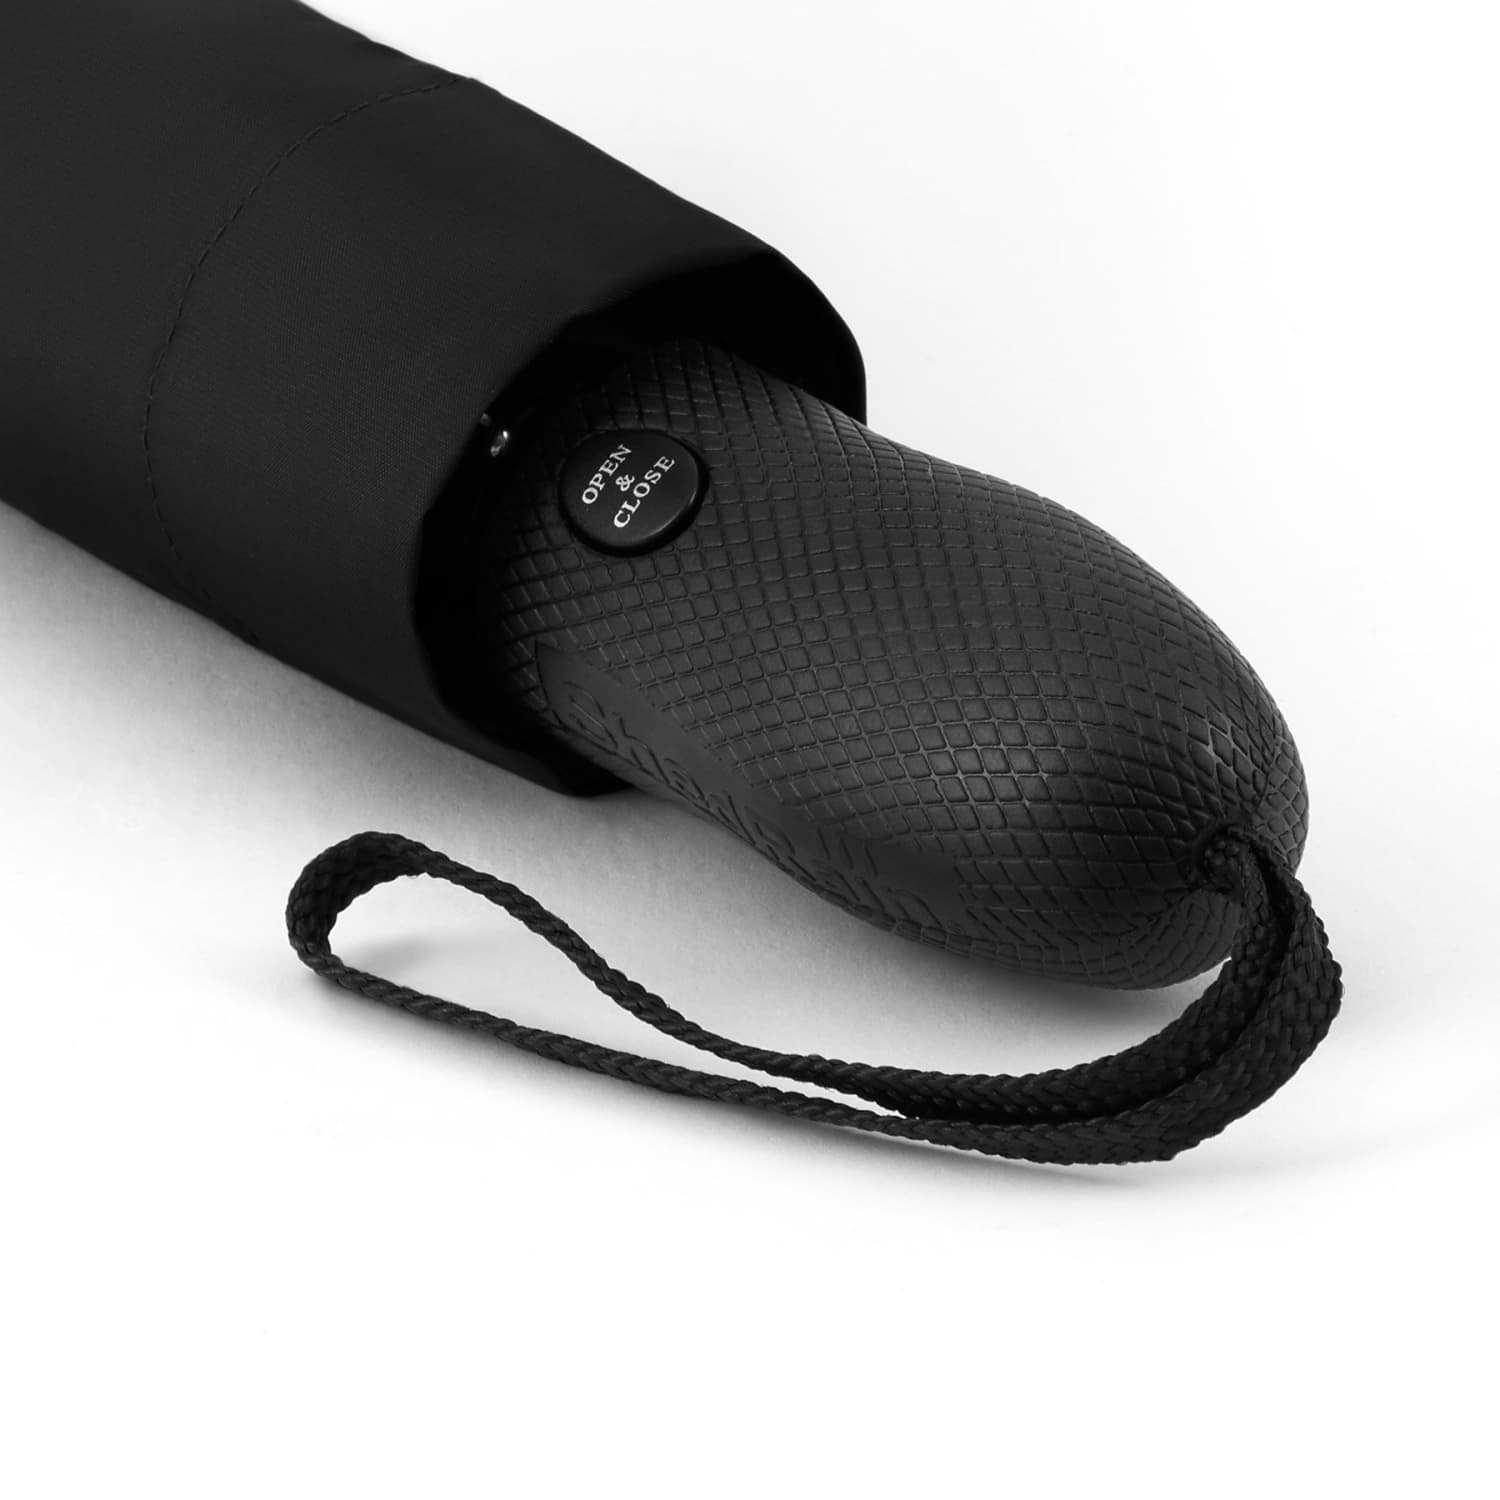 ShedRain Windjammer Umbrella black handle with auto open close button